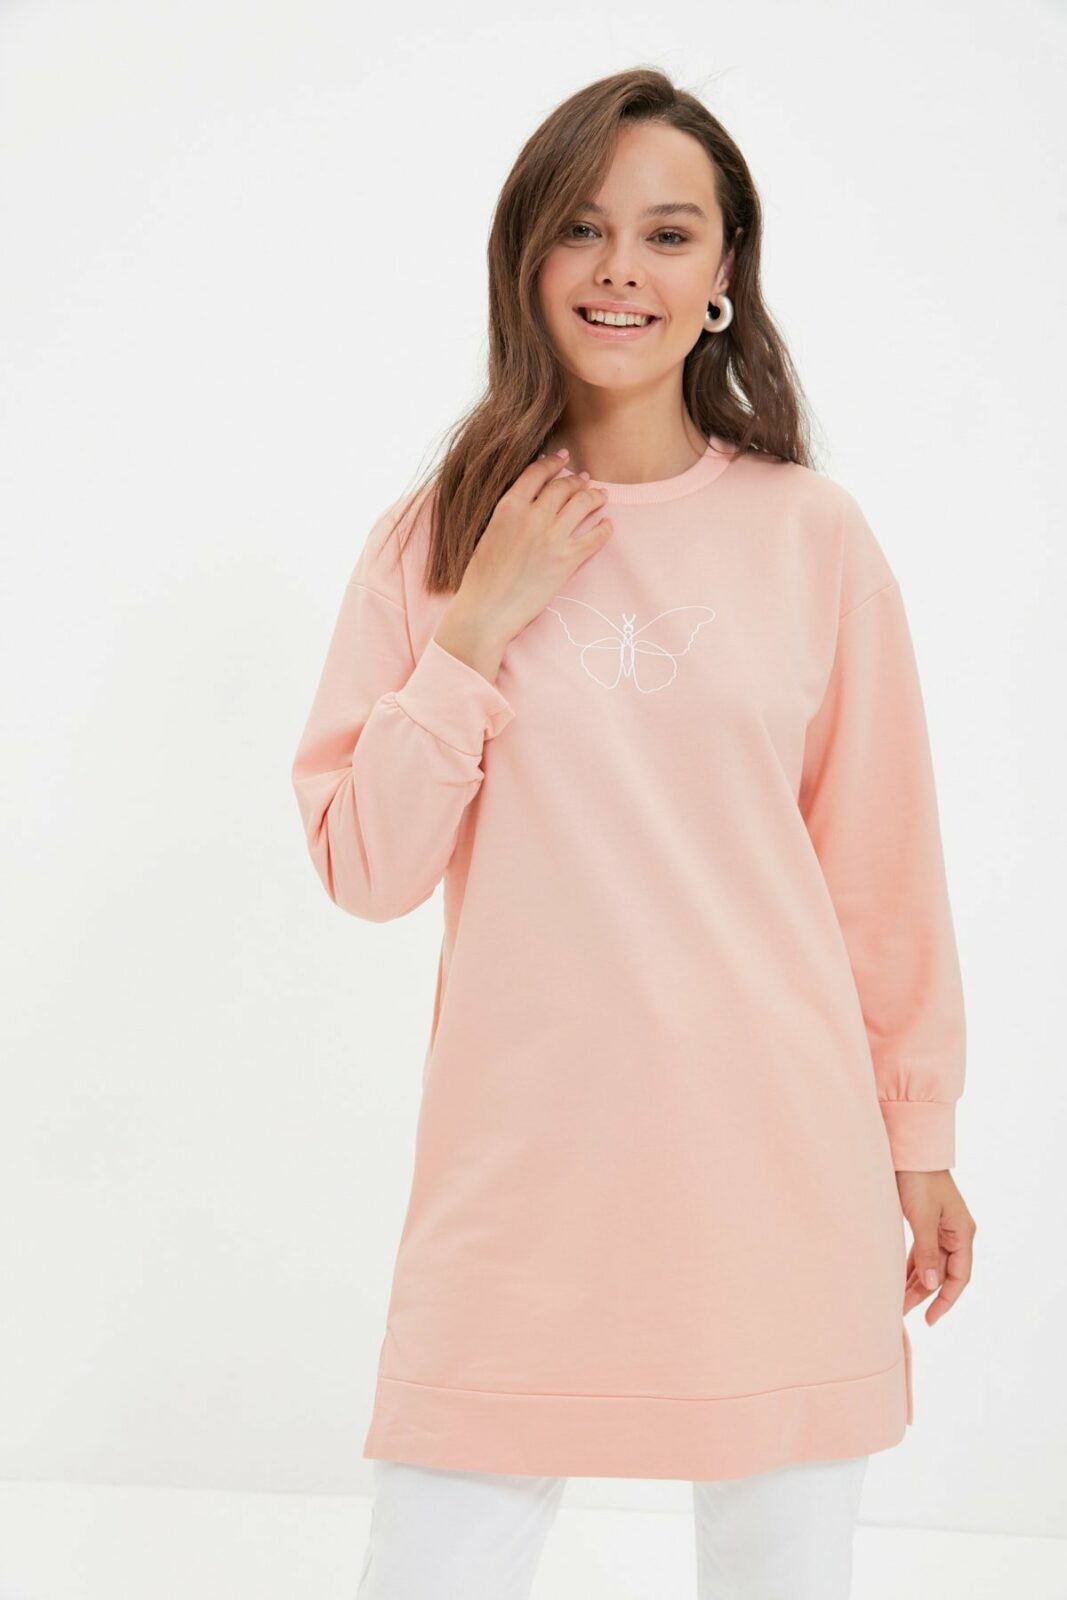 Trendyol Sweatshirt - Pink -